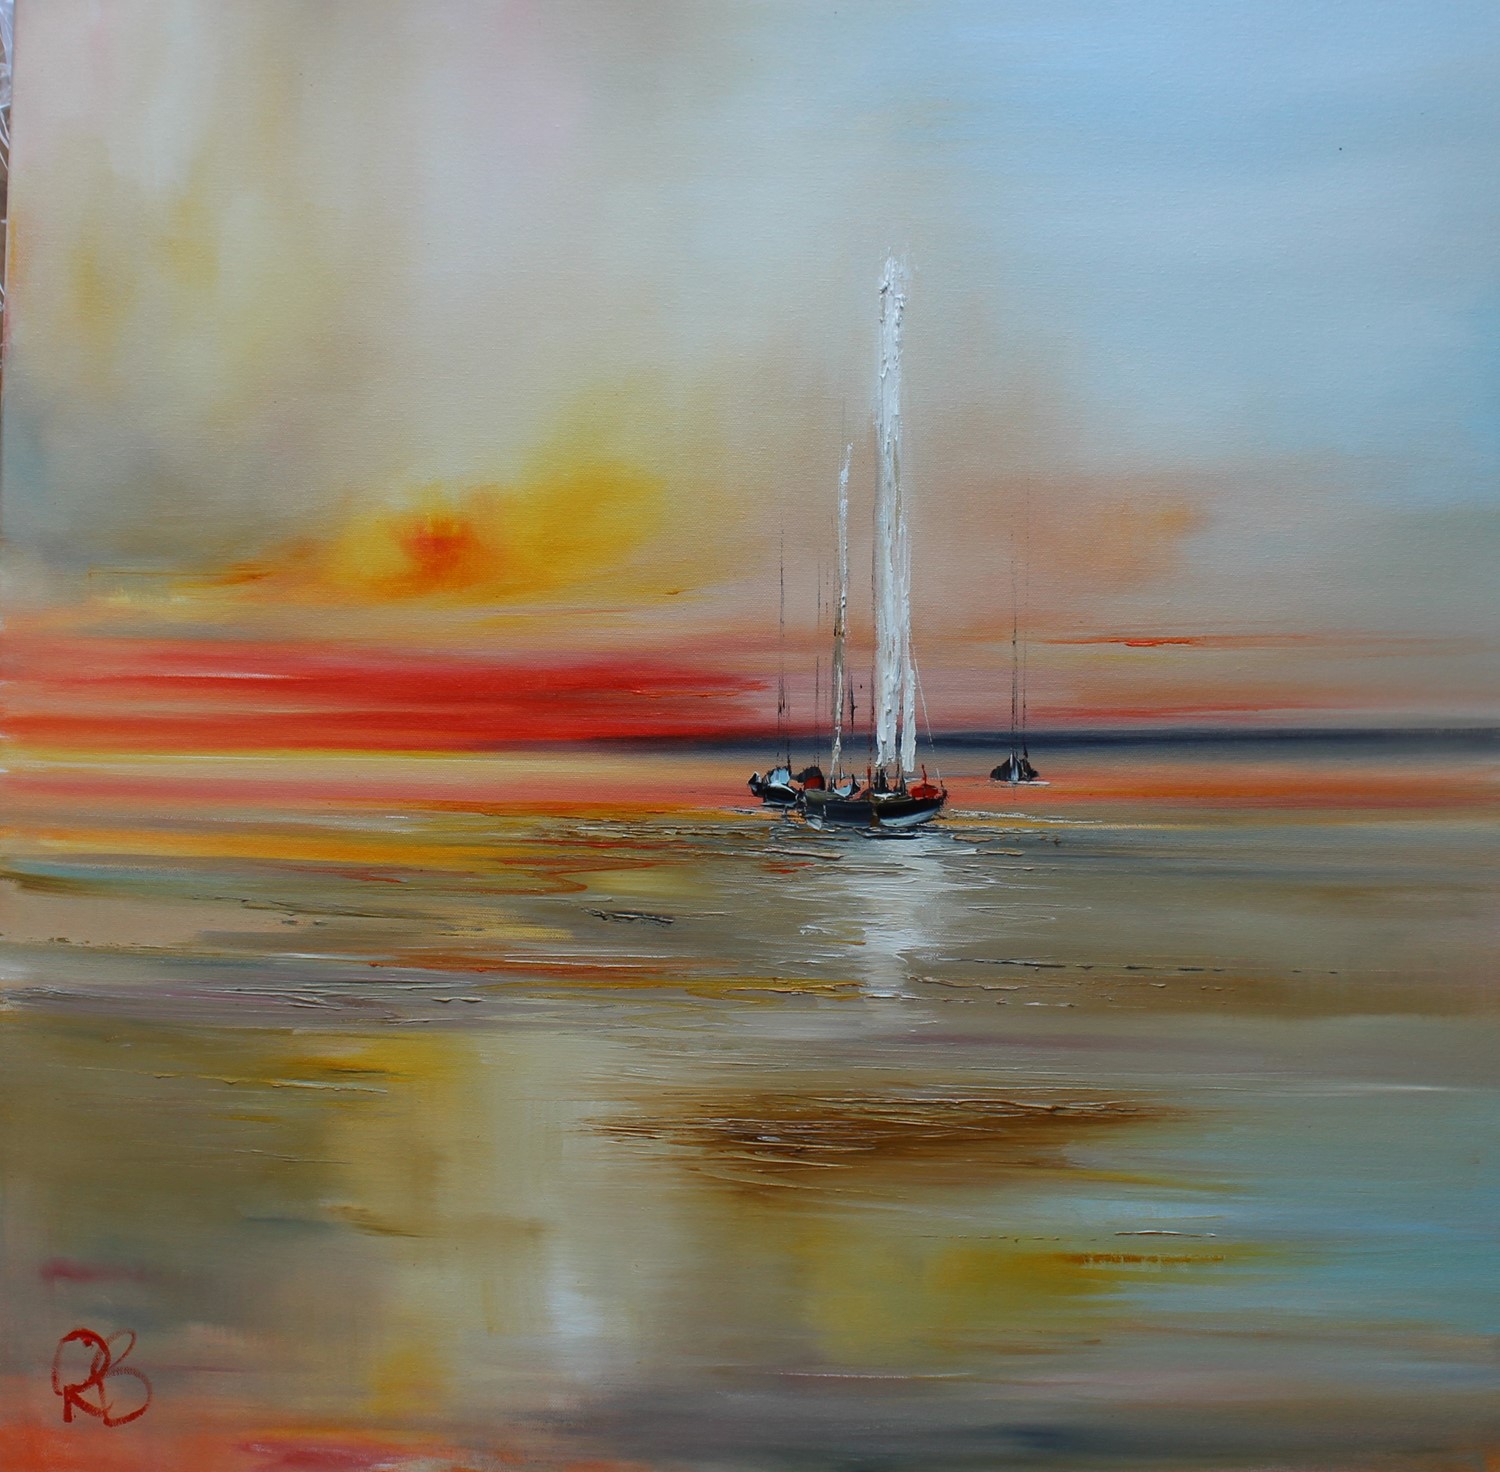 'Sail lit by Sunset' by artist Rosanne Barr